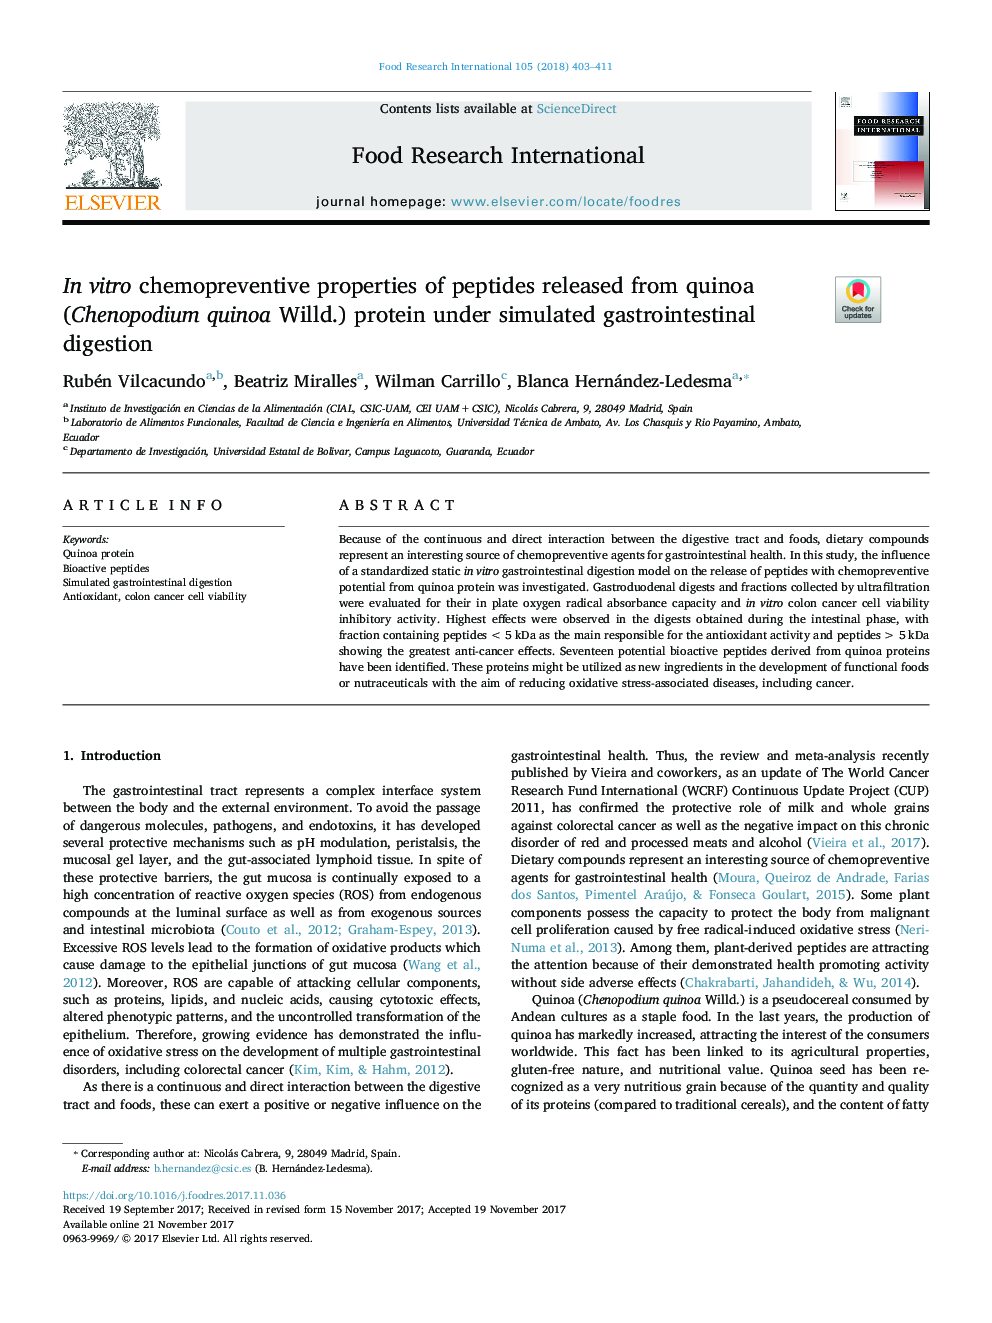 In vitro chemopreventive properties of peptides released from quinoa (Chenopodium quinoa Willd.) protein under simulated gastrointestinal digestion